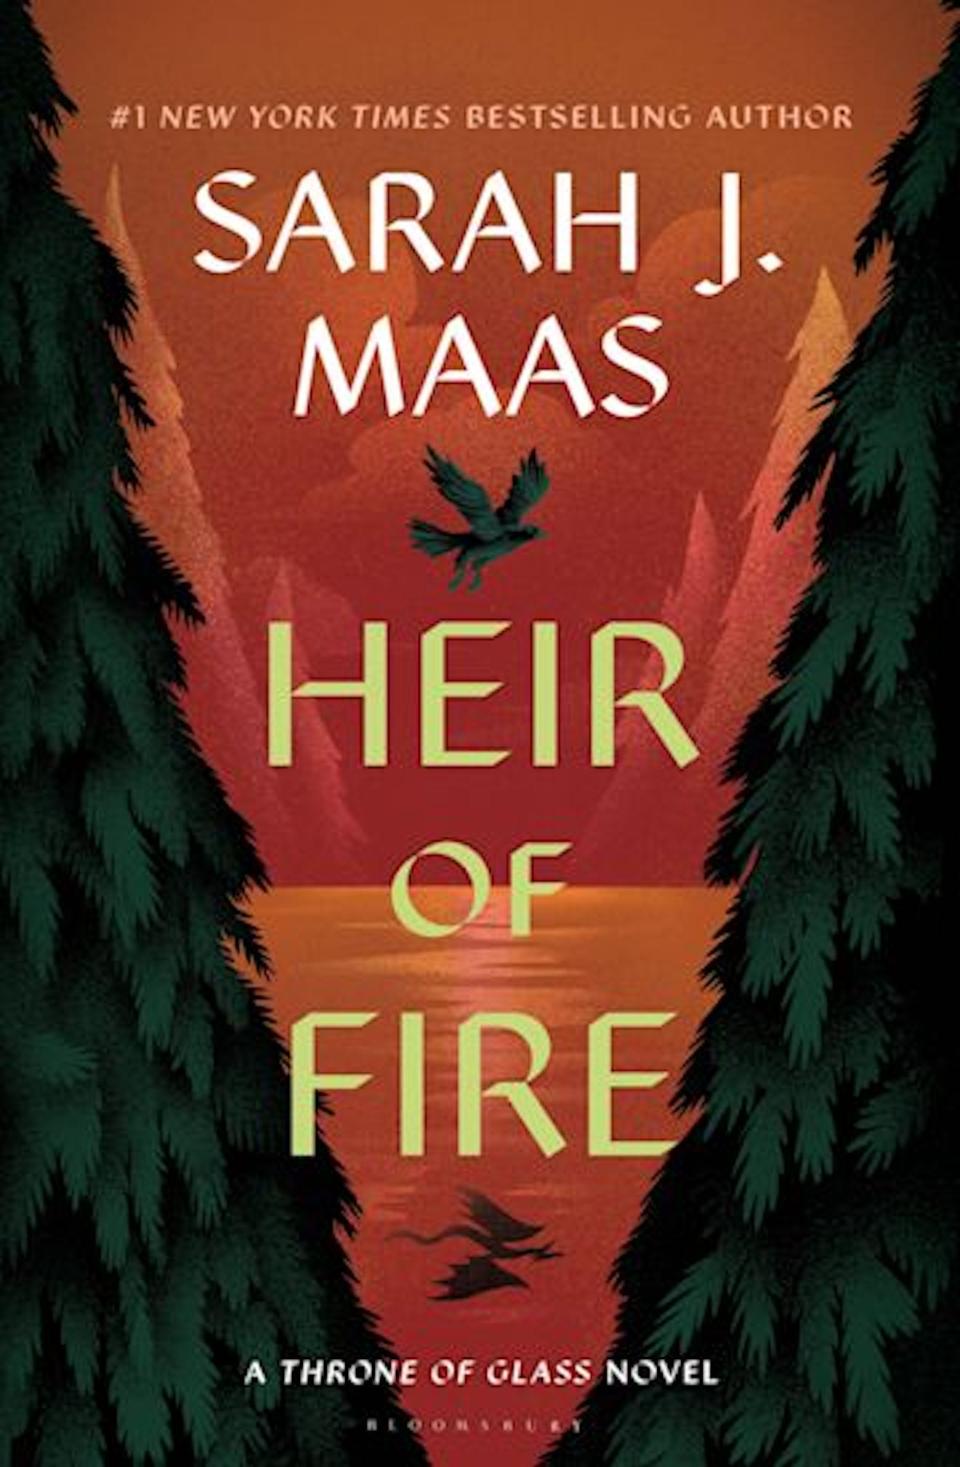 "Heir of Fire" by Sarah J. Maas.